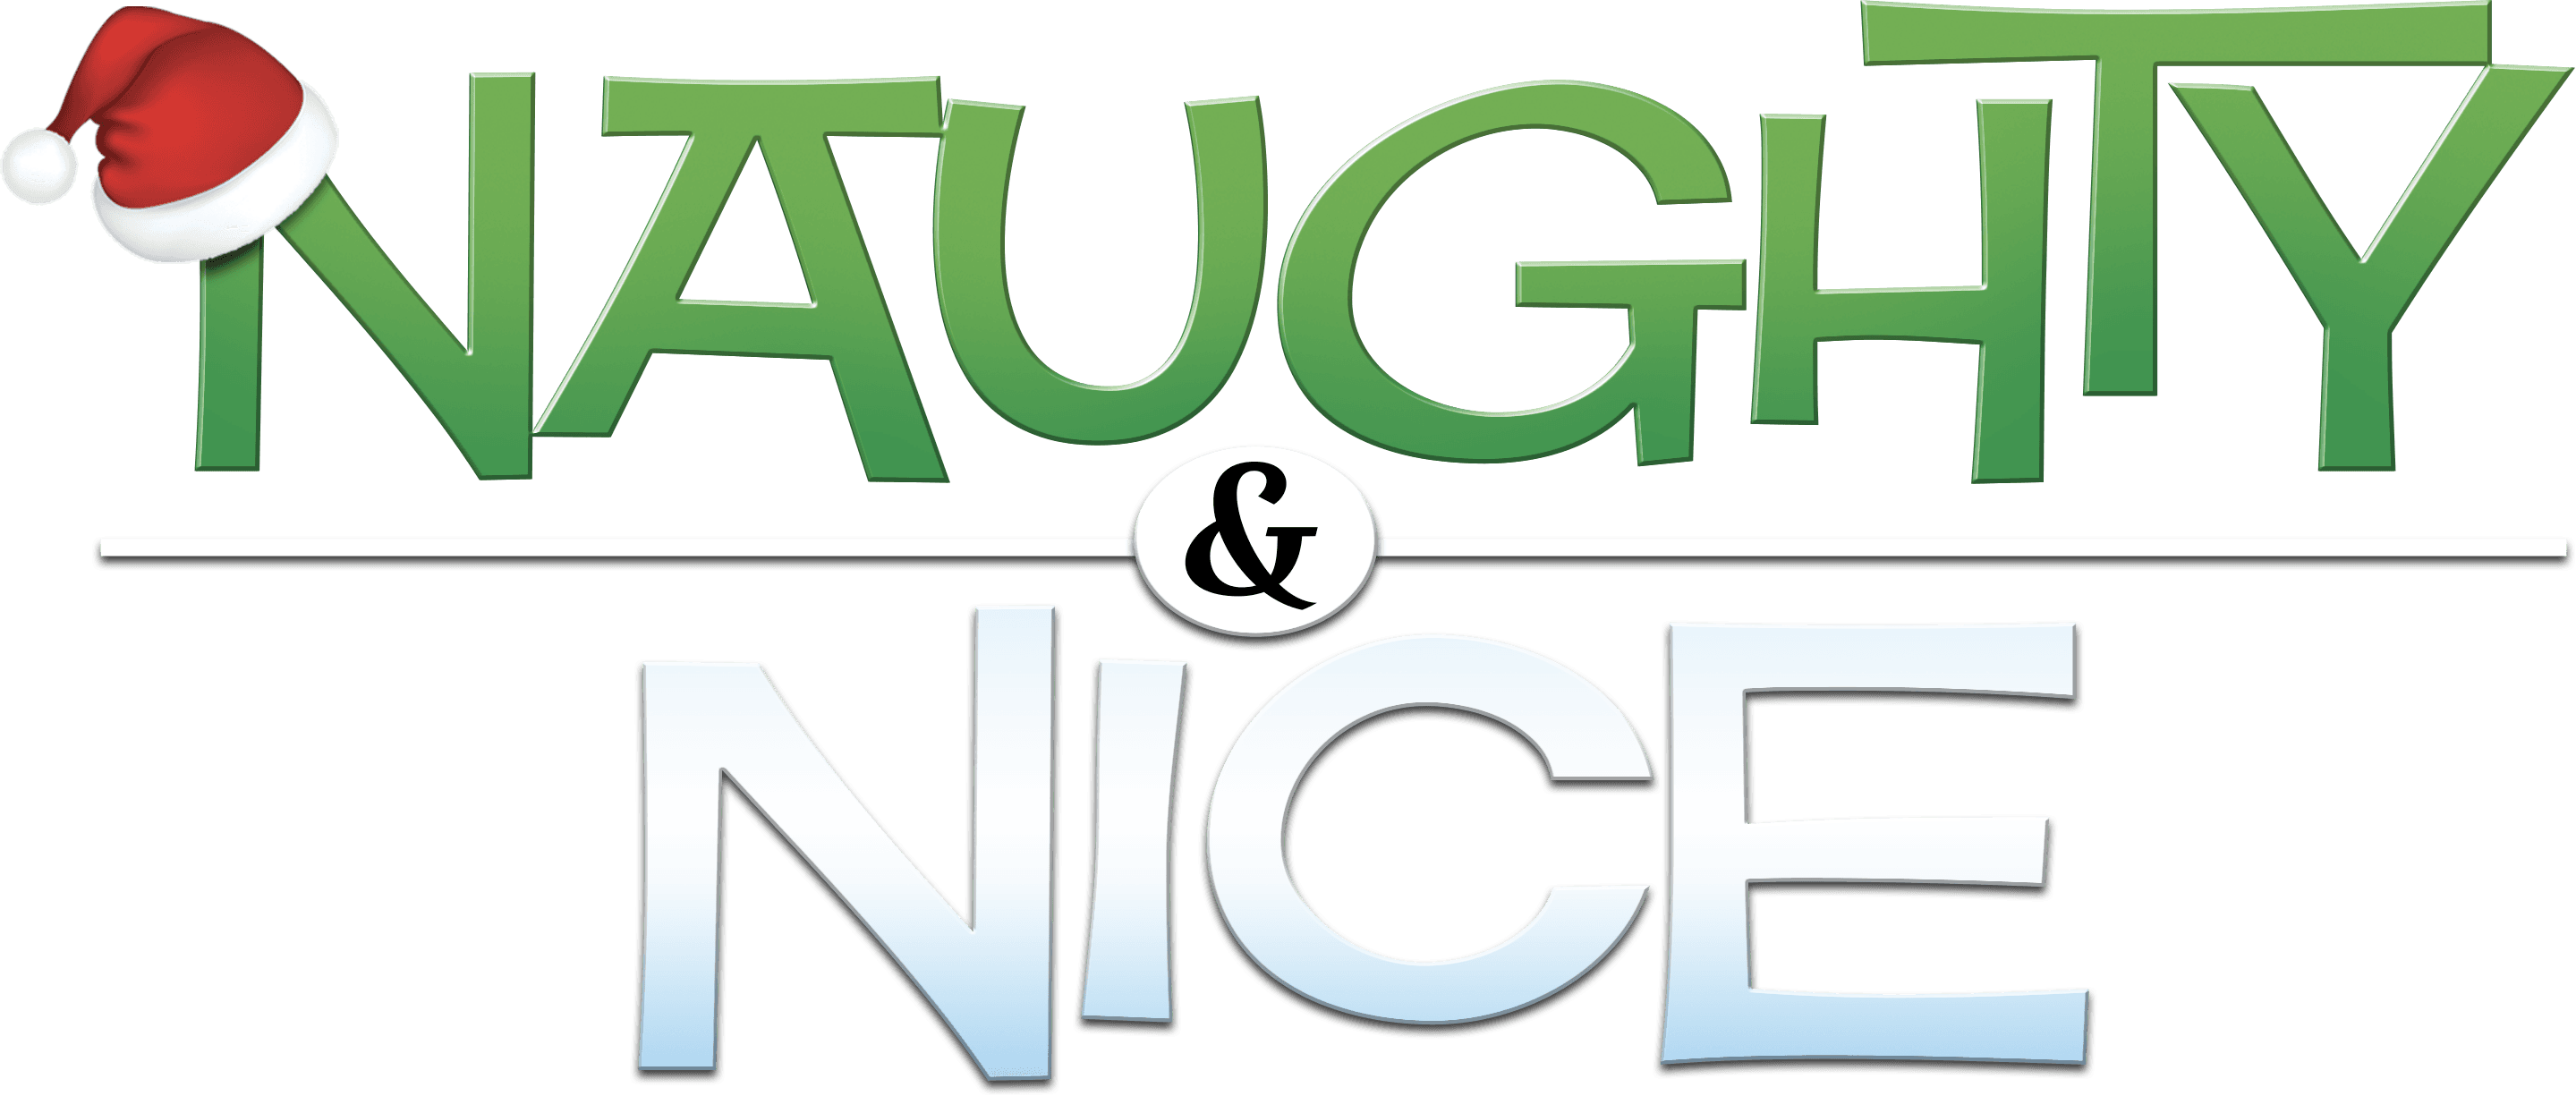 Naughty & Nice logo